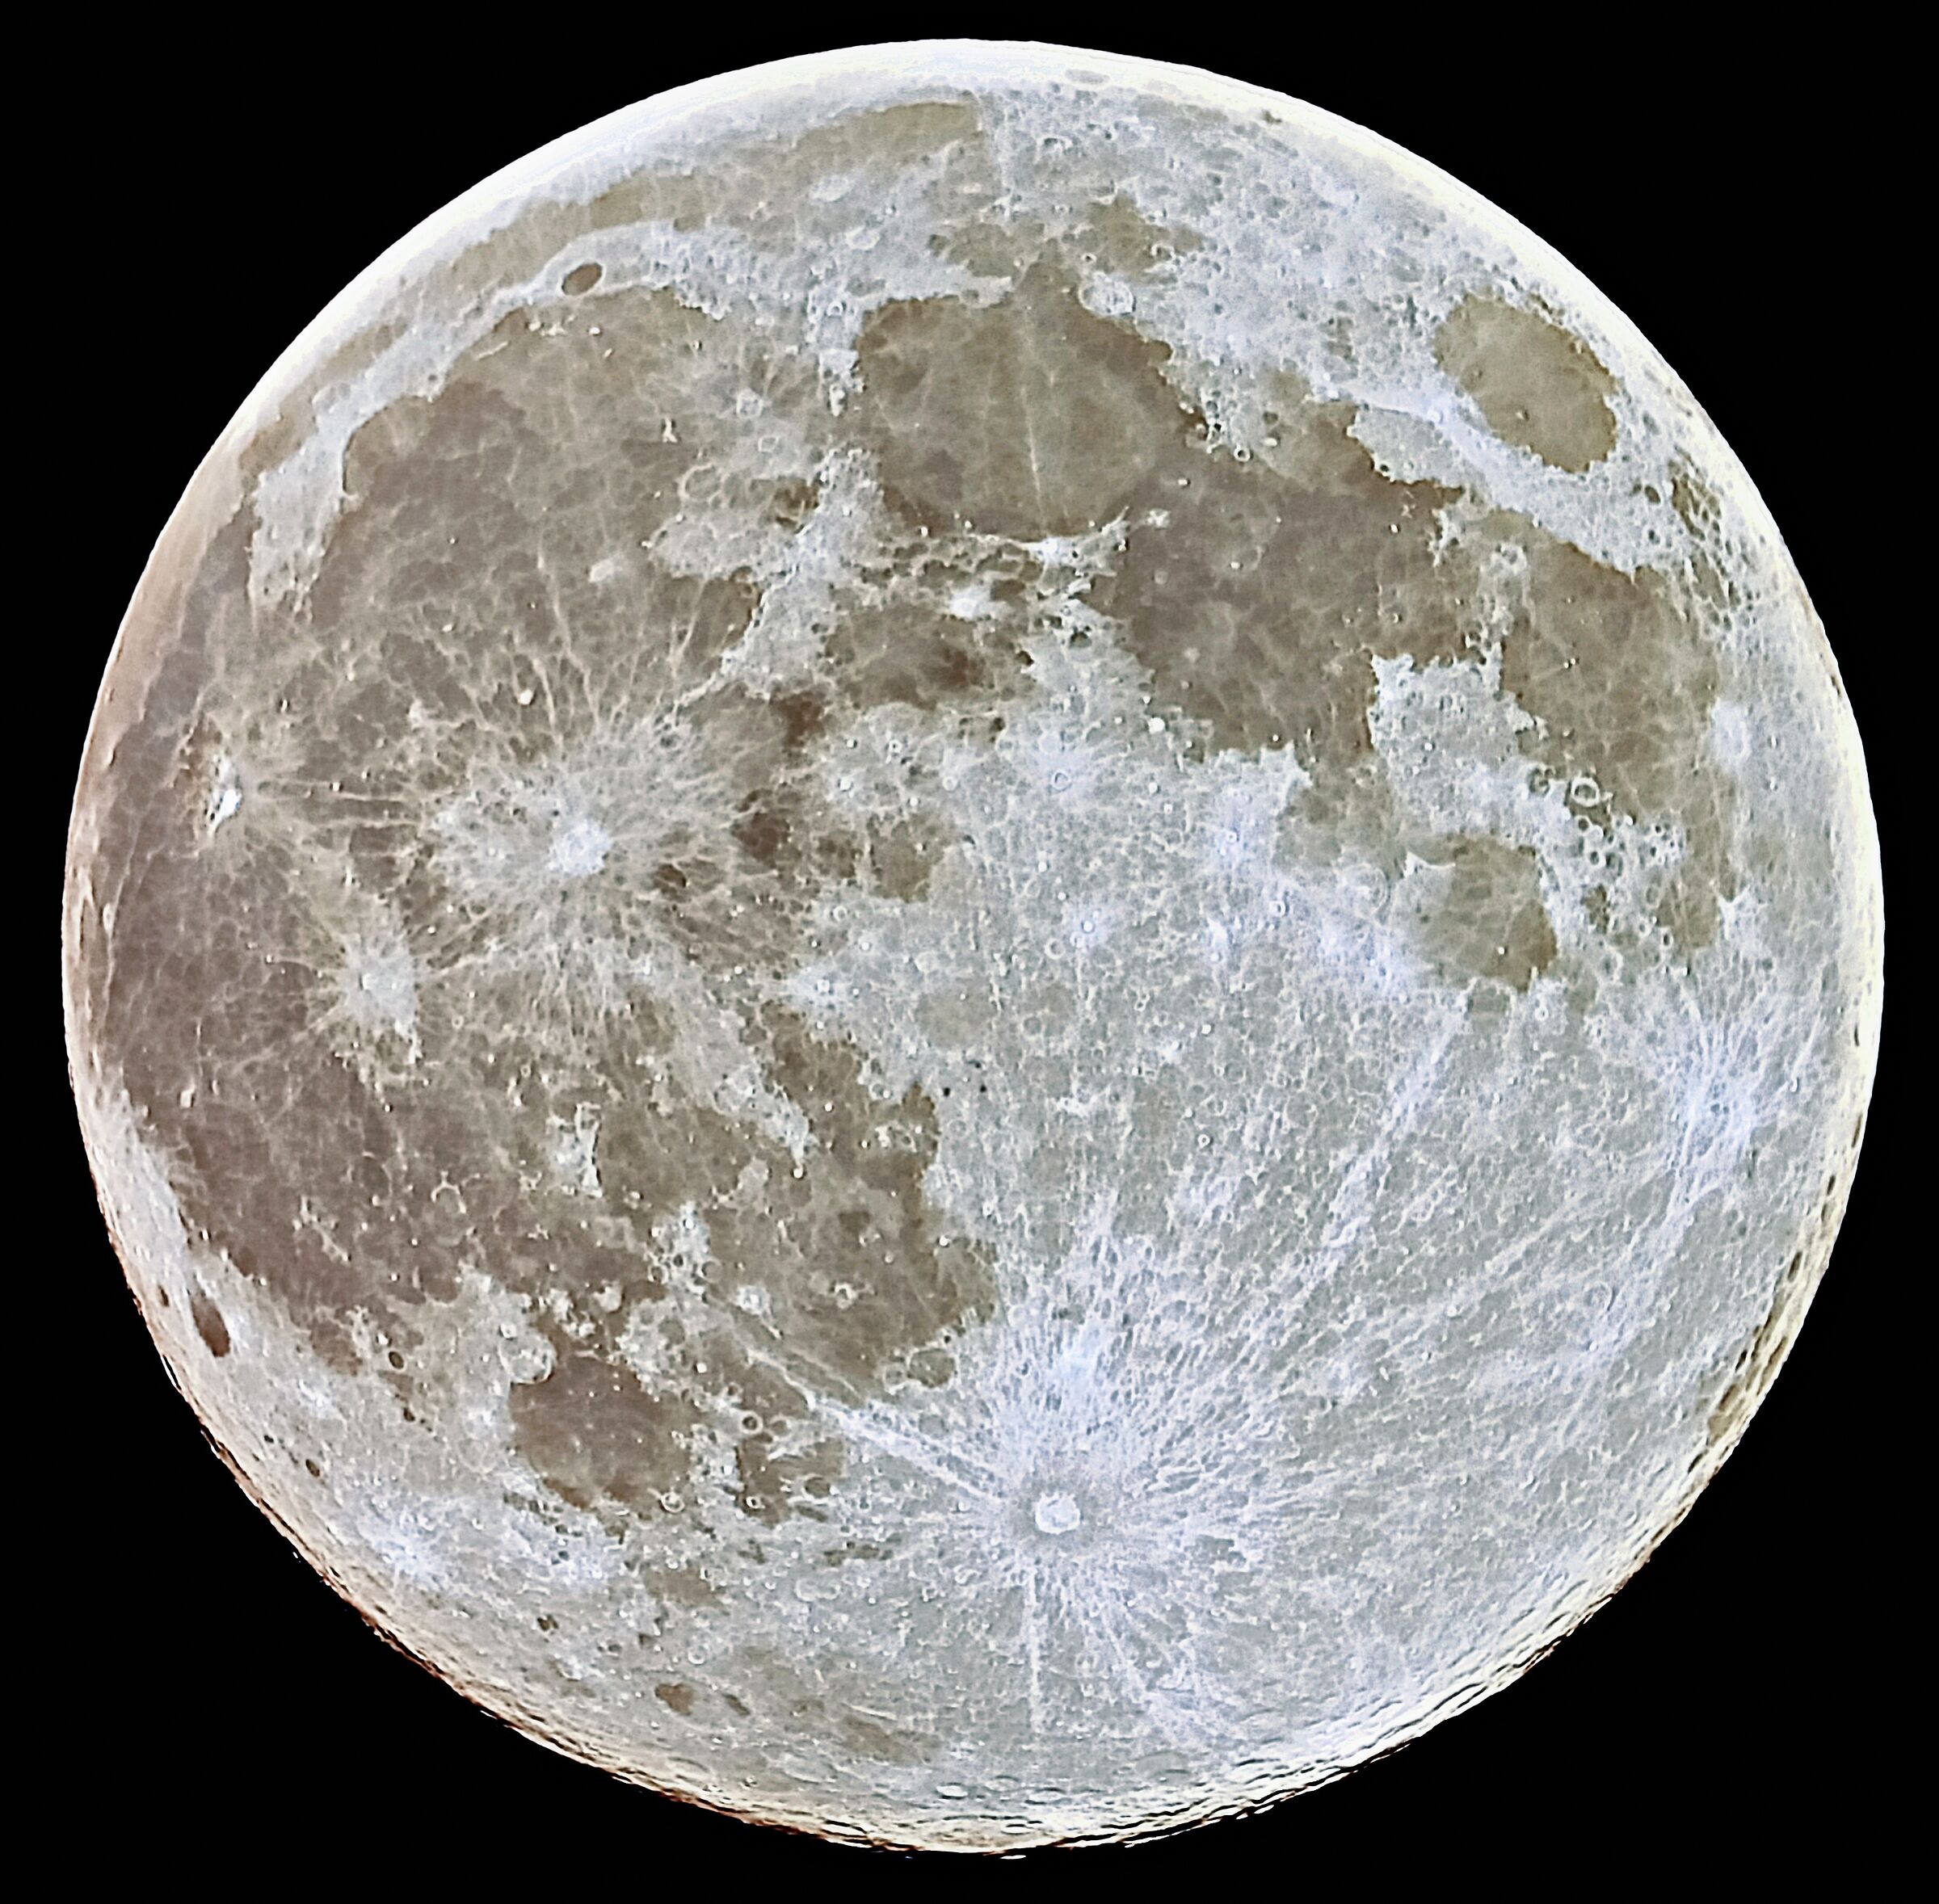 Super Moon resolution test...